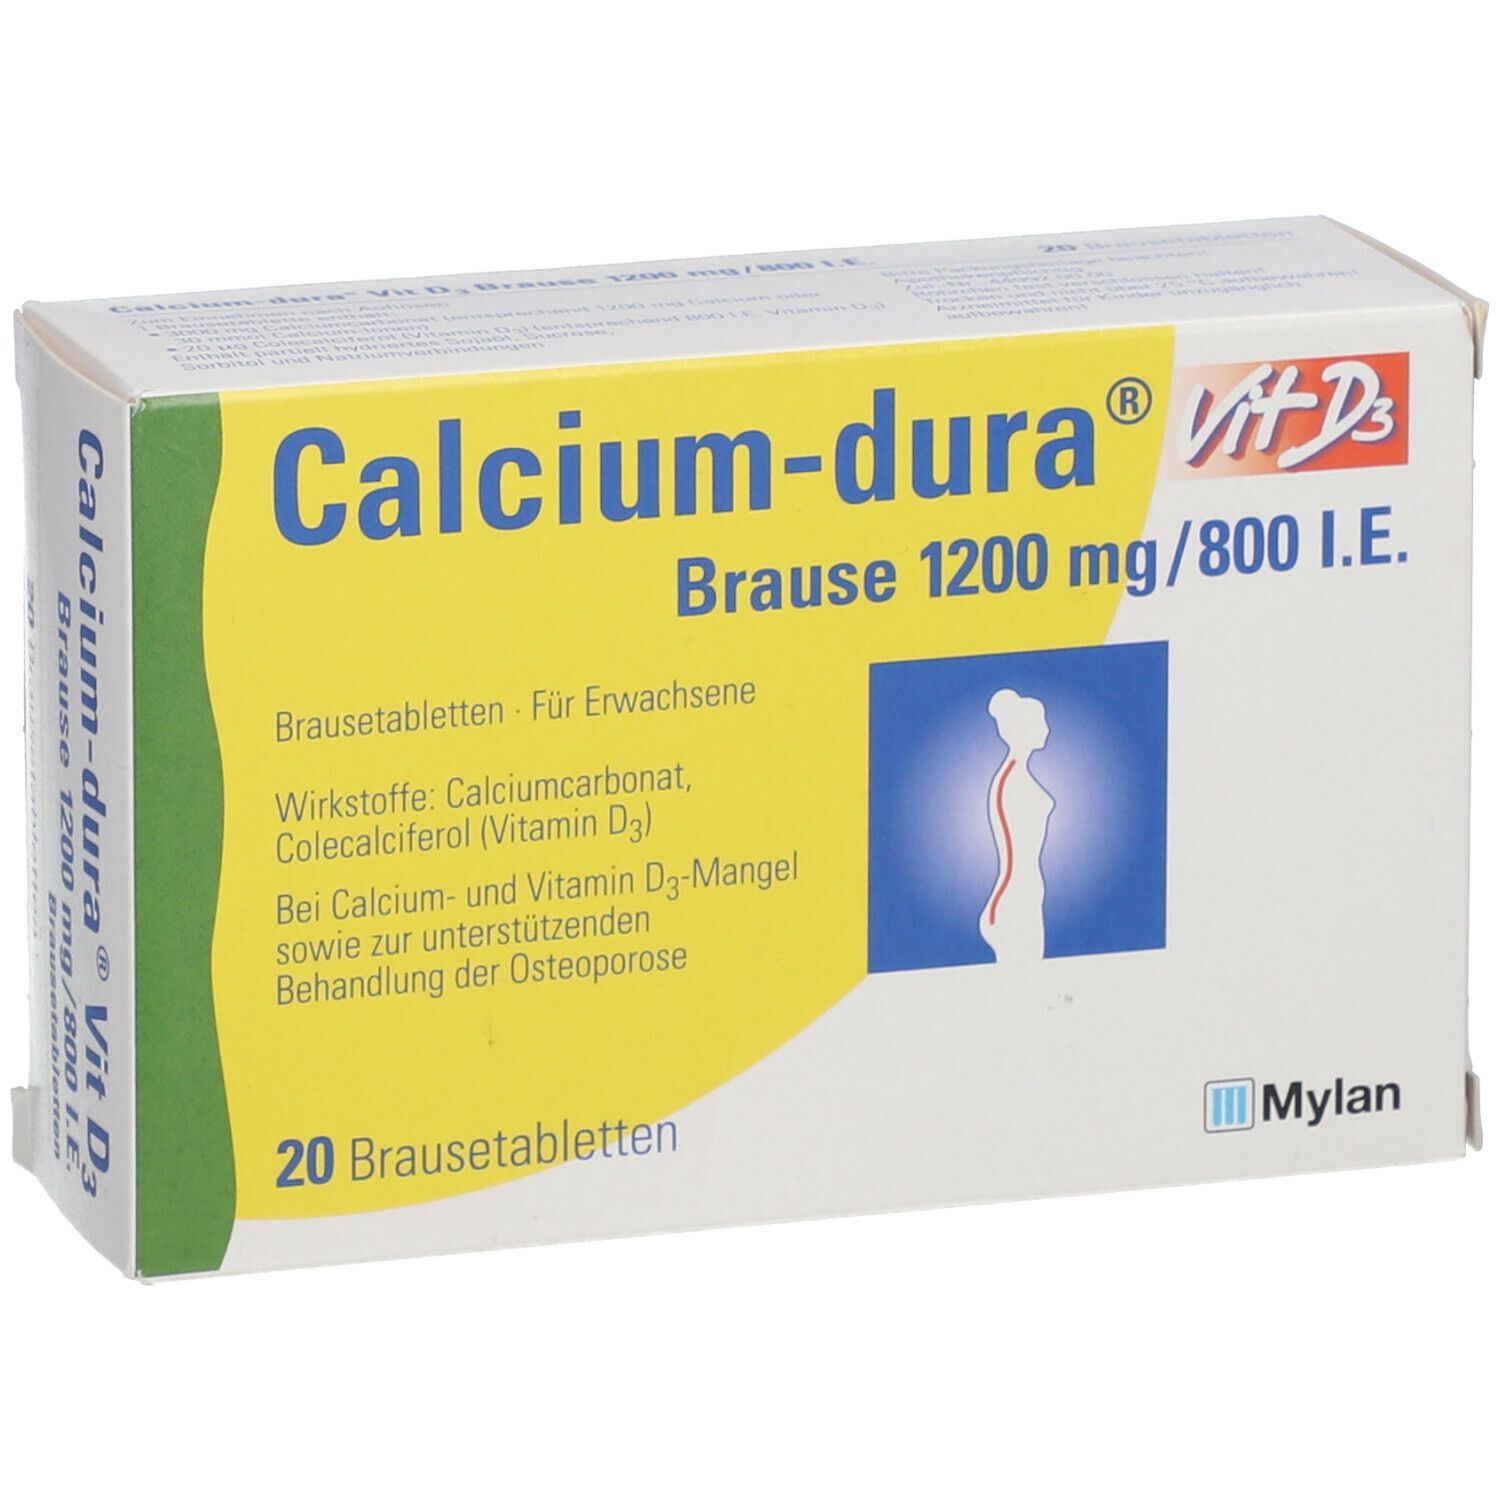 Calcium-dura® Vit. D3 1200 mg/ 800 I.E. Brausetabletten